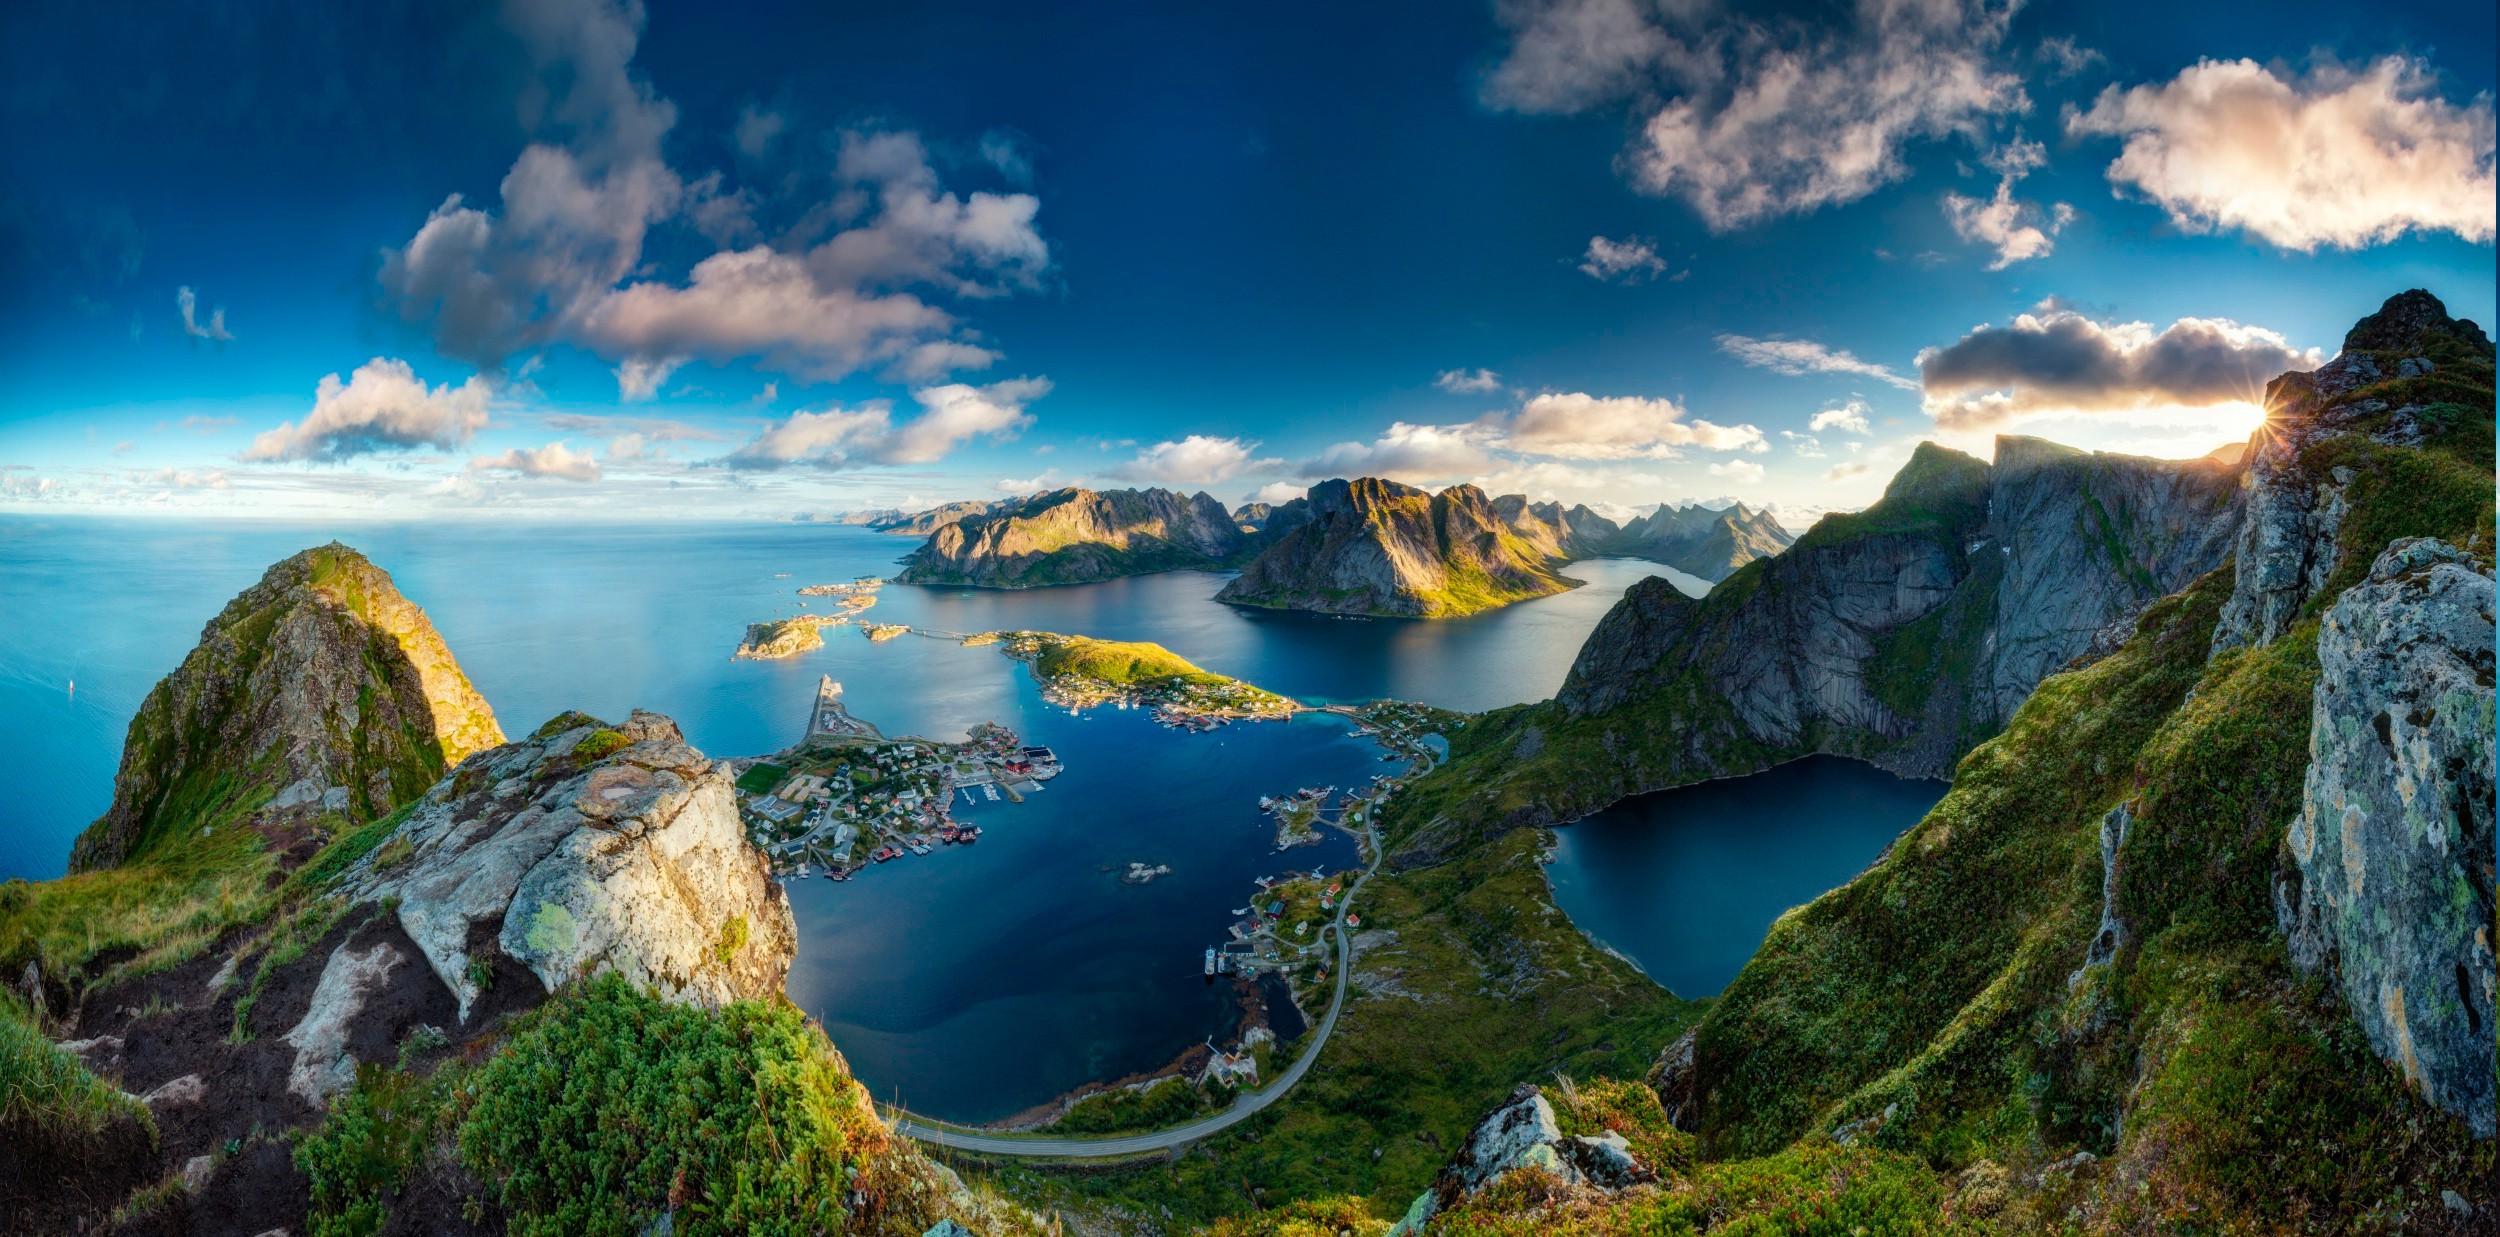 158864-nature-landscape-sea-clouds-sunlight-Sun-mountain-rock-Norway-town-road-island.jpg